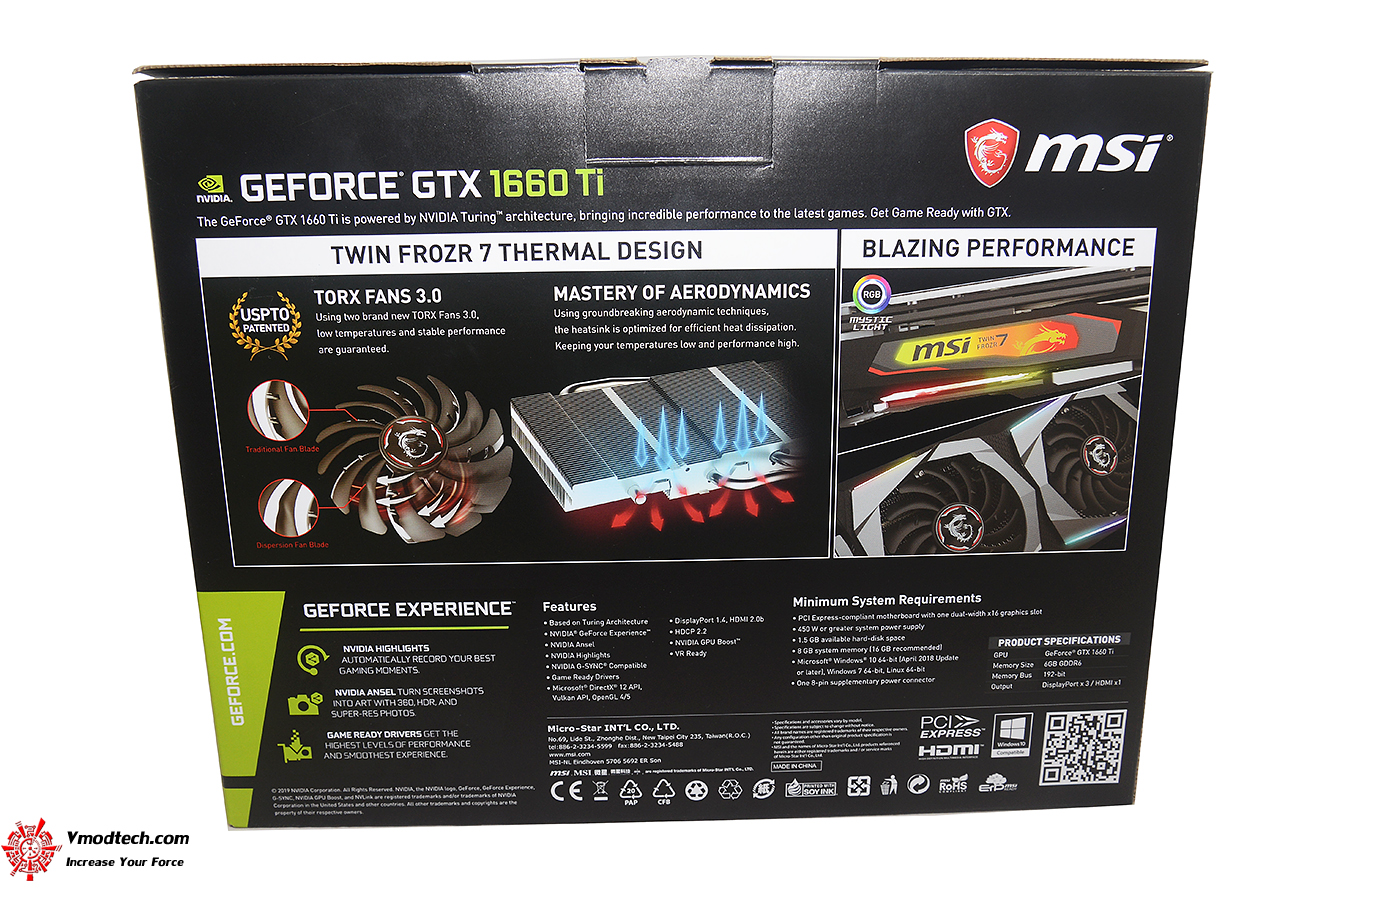 dsc 6105 MSI GEFORCE GTX 1660Ti GAMING X REVIEW